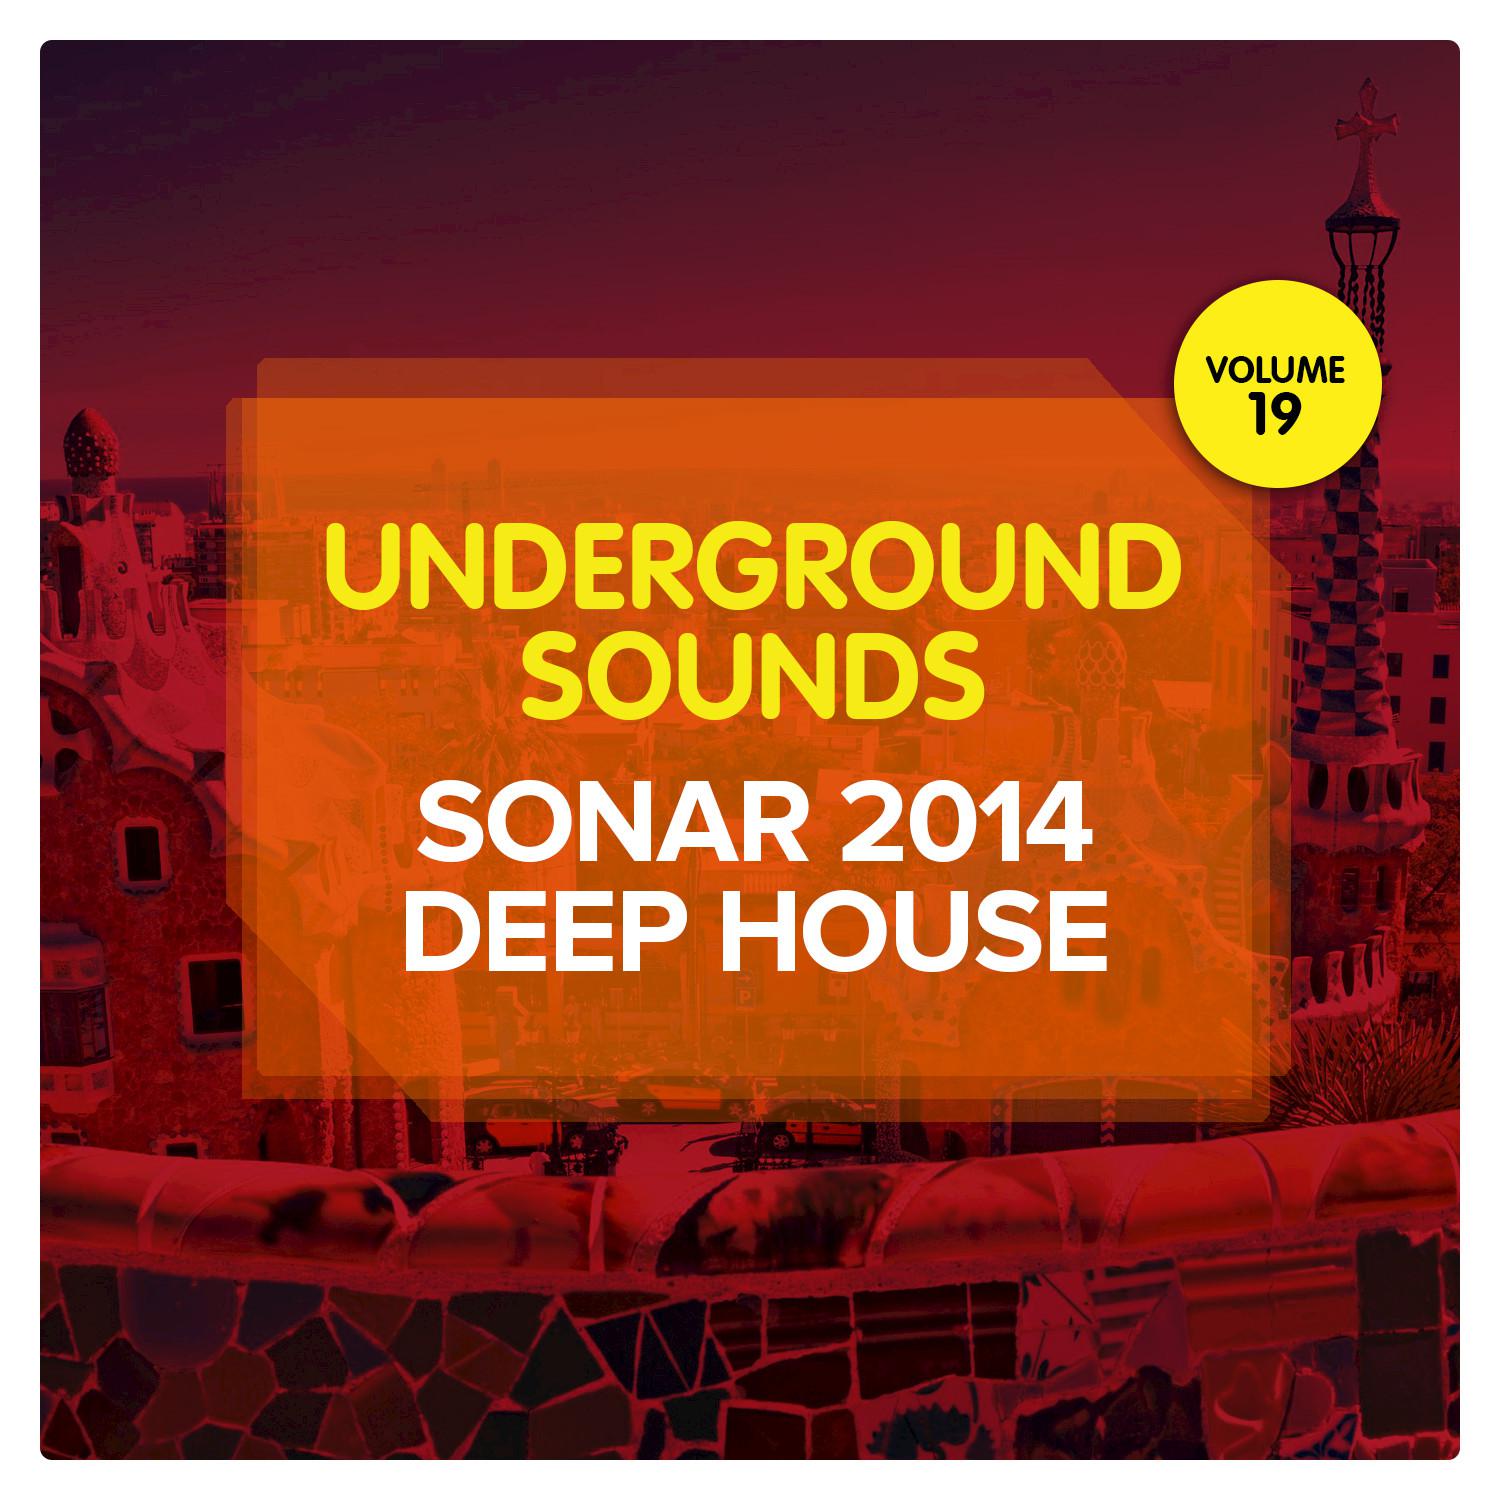 Sonar 2014 Deep House - Underground Sounds, Vol. 19